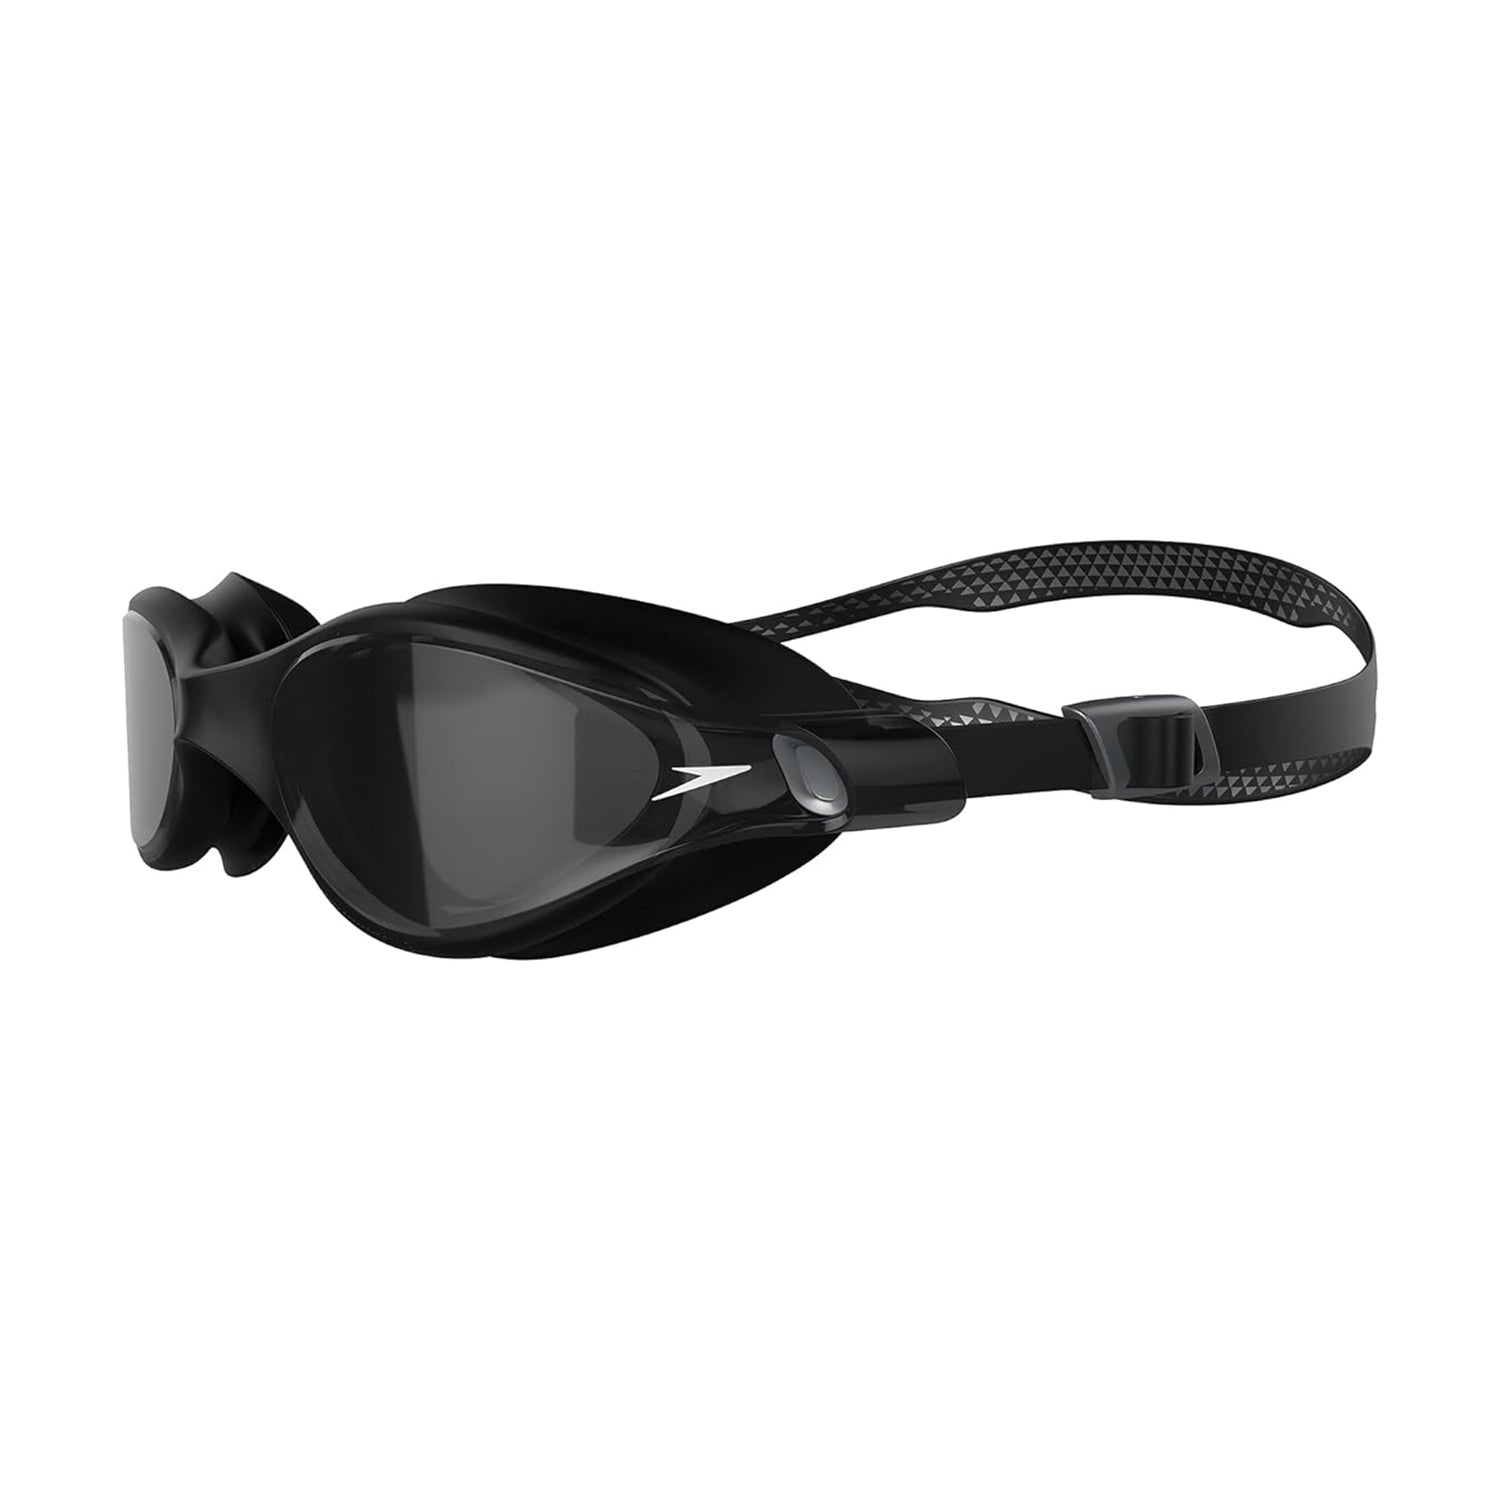 Speedo VUE Swimming Adult Goggles, Black/Smoke - Best Price online Prokicksports.com